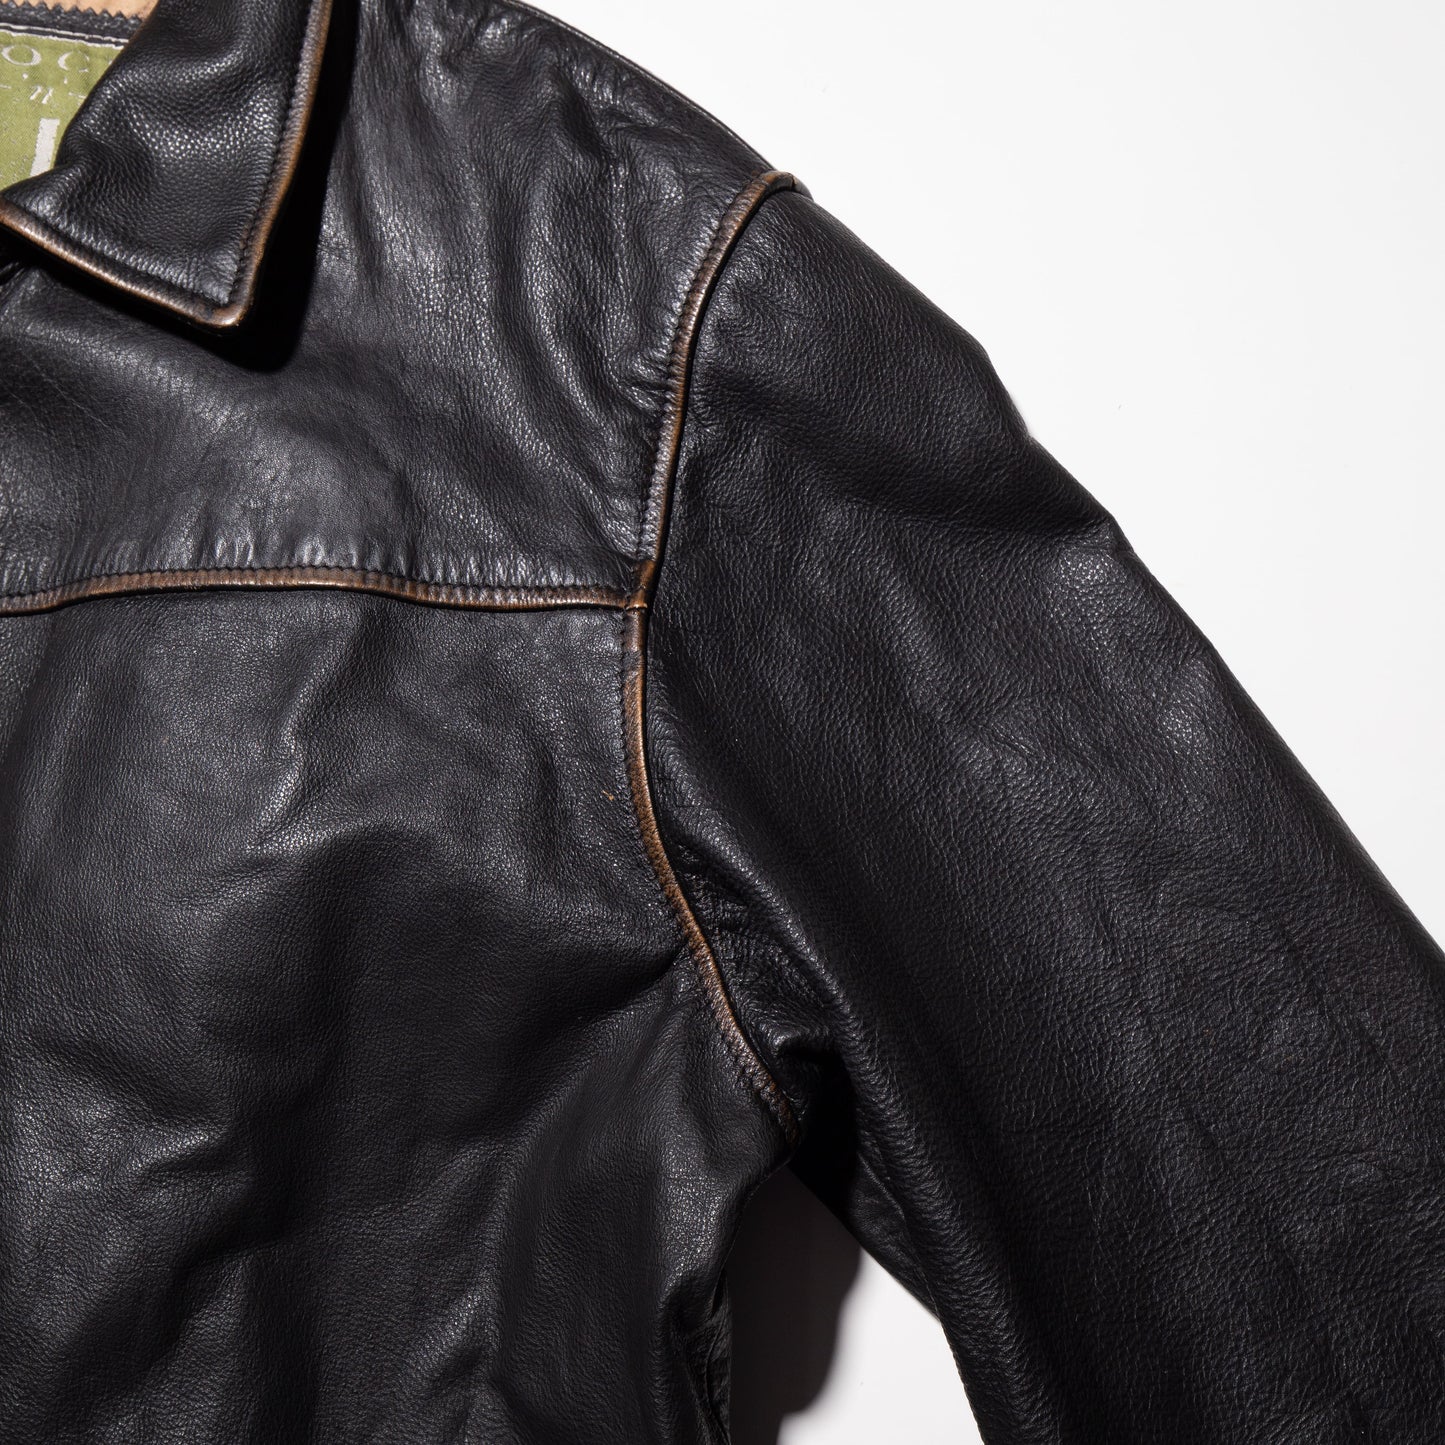 vintage fade loose leather jacket